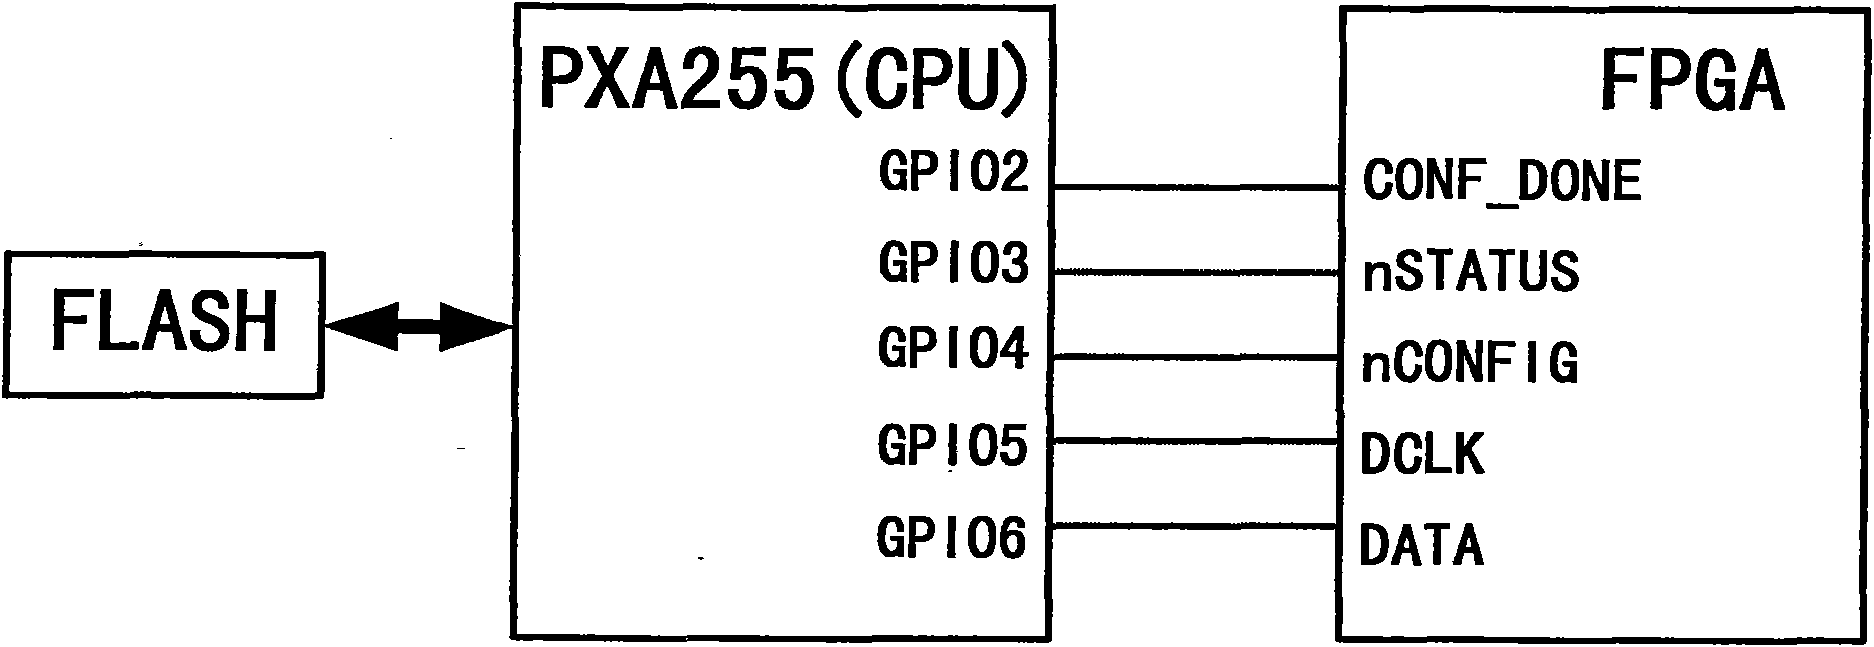 Field programmable gate array (FPGA) online configuration method